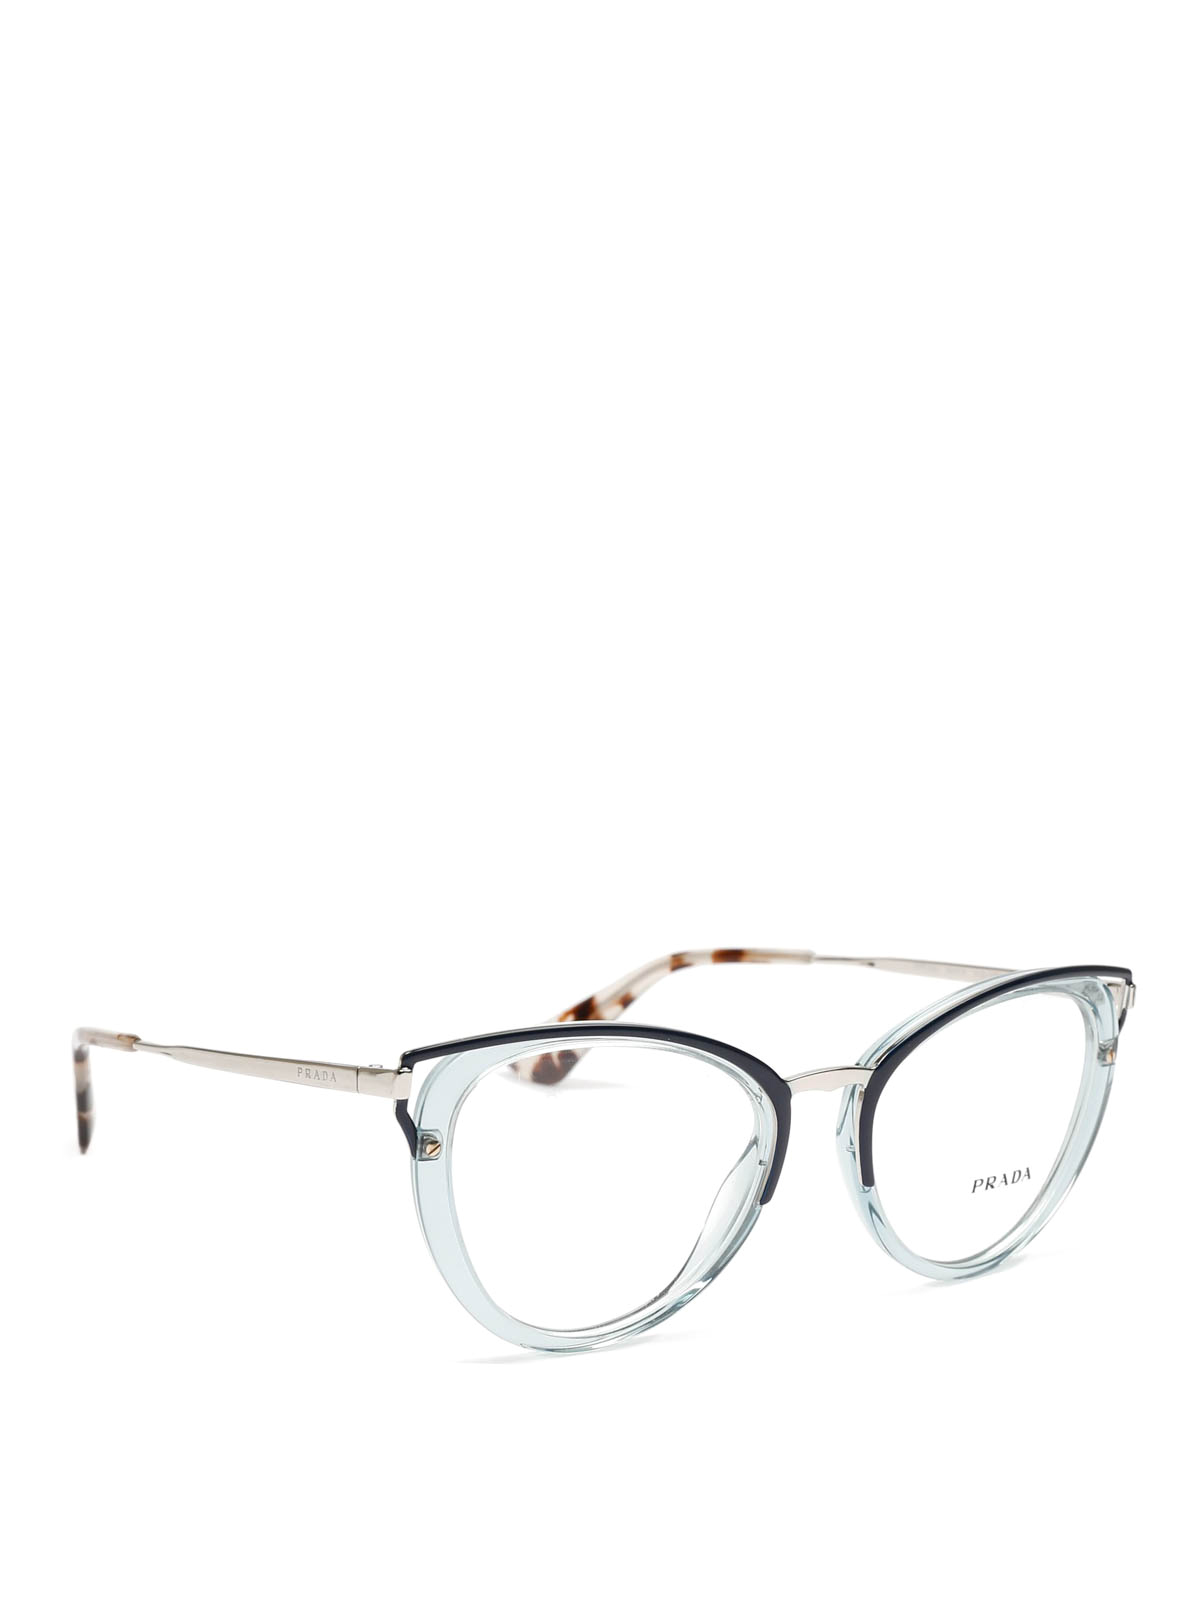 optical glasses prada